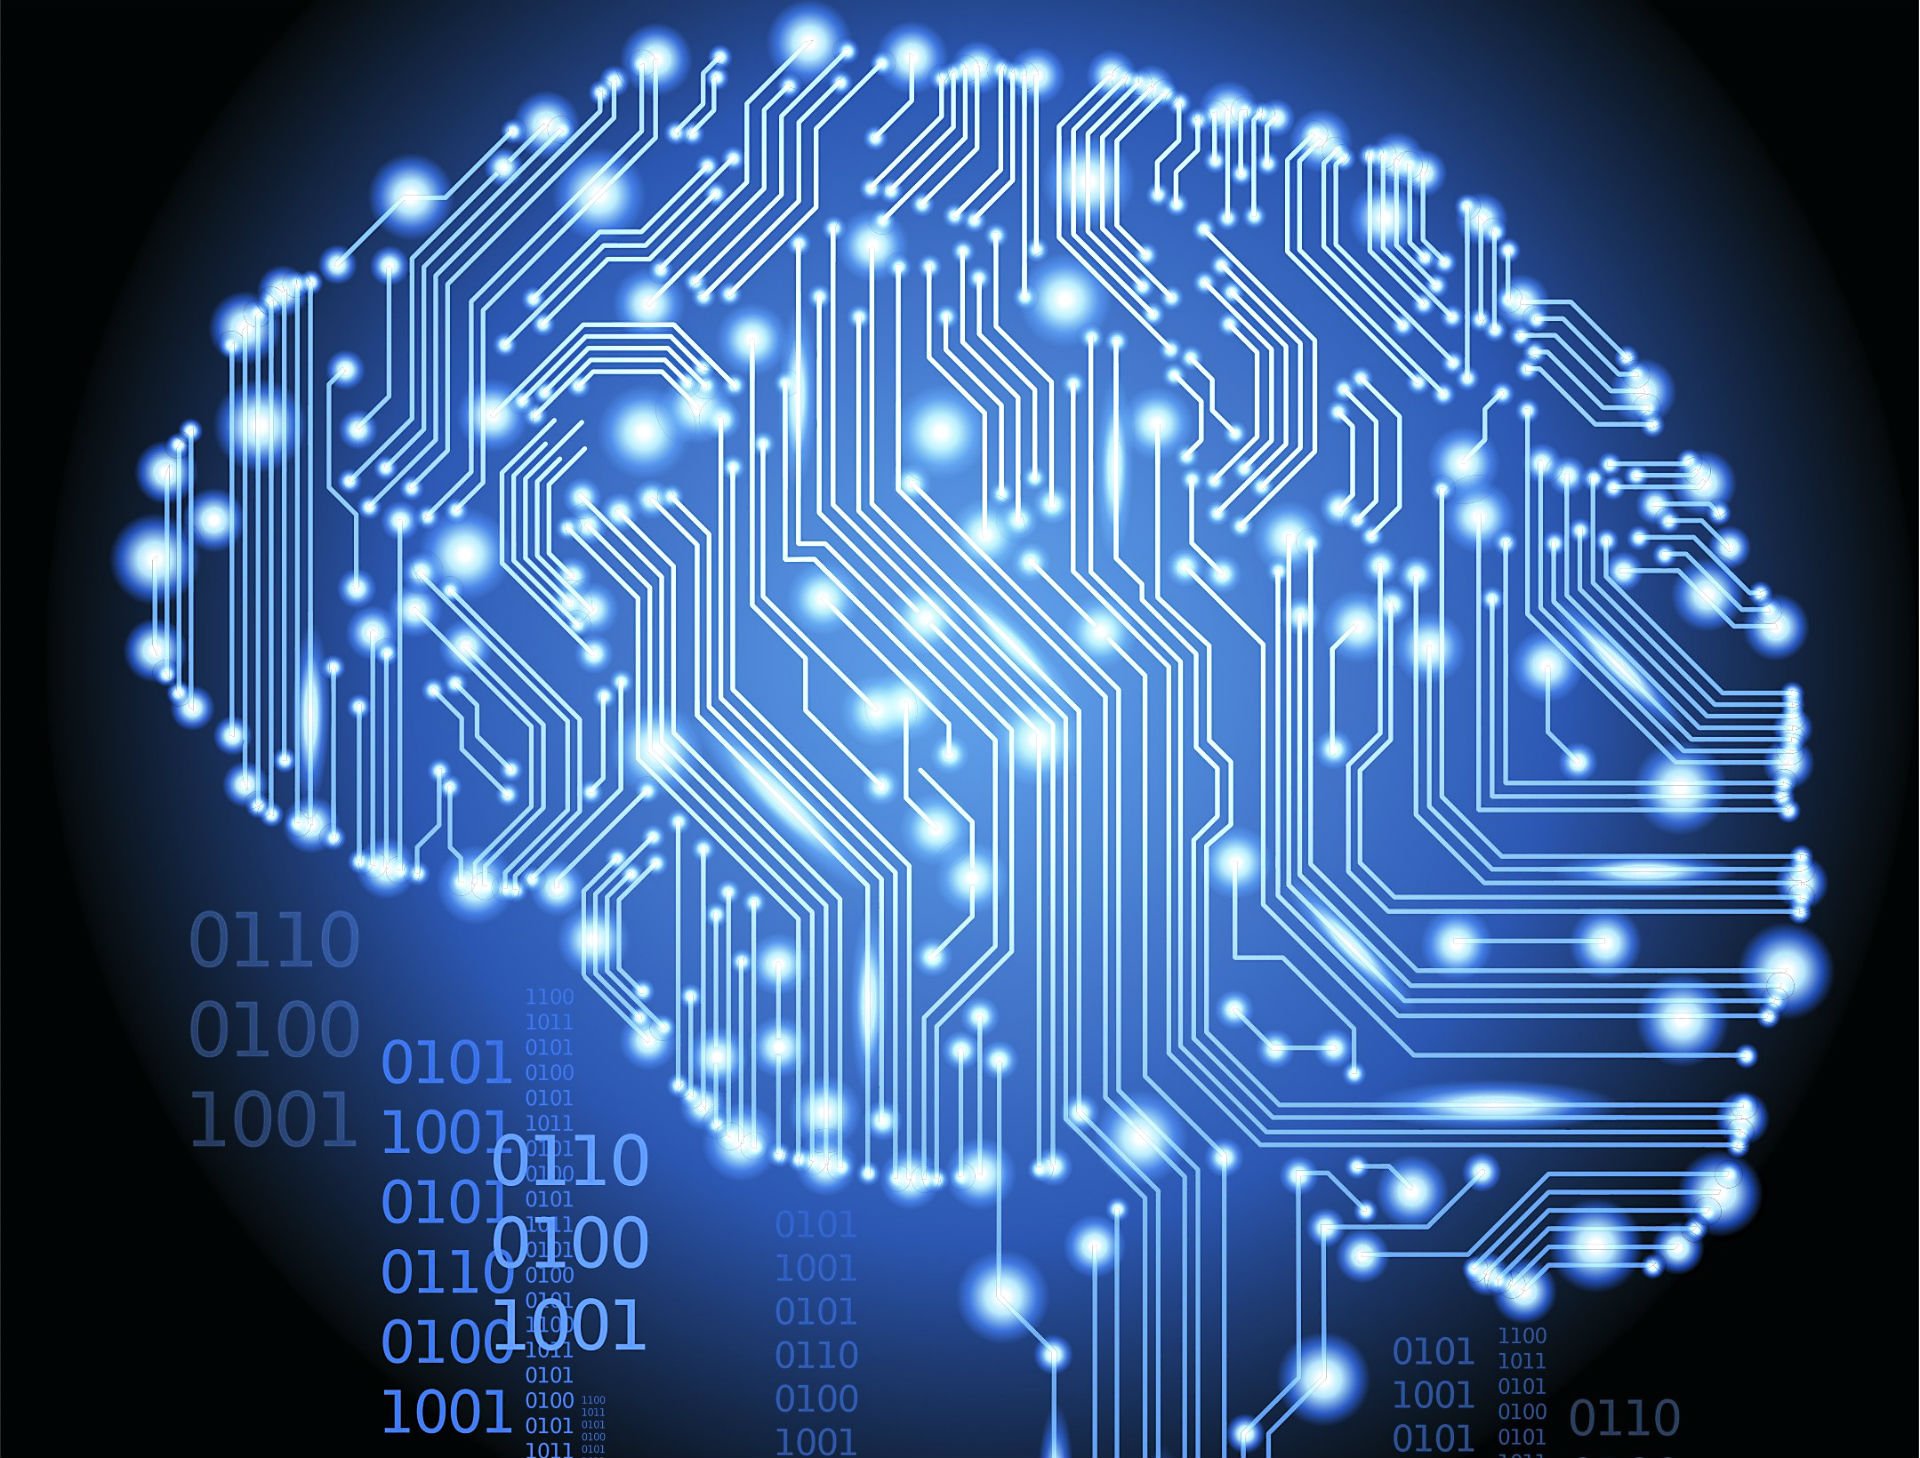 computer engineering science tech brain wallpaper background